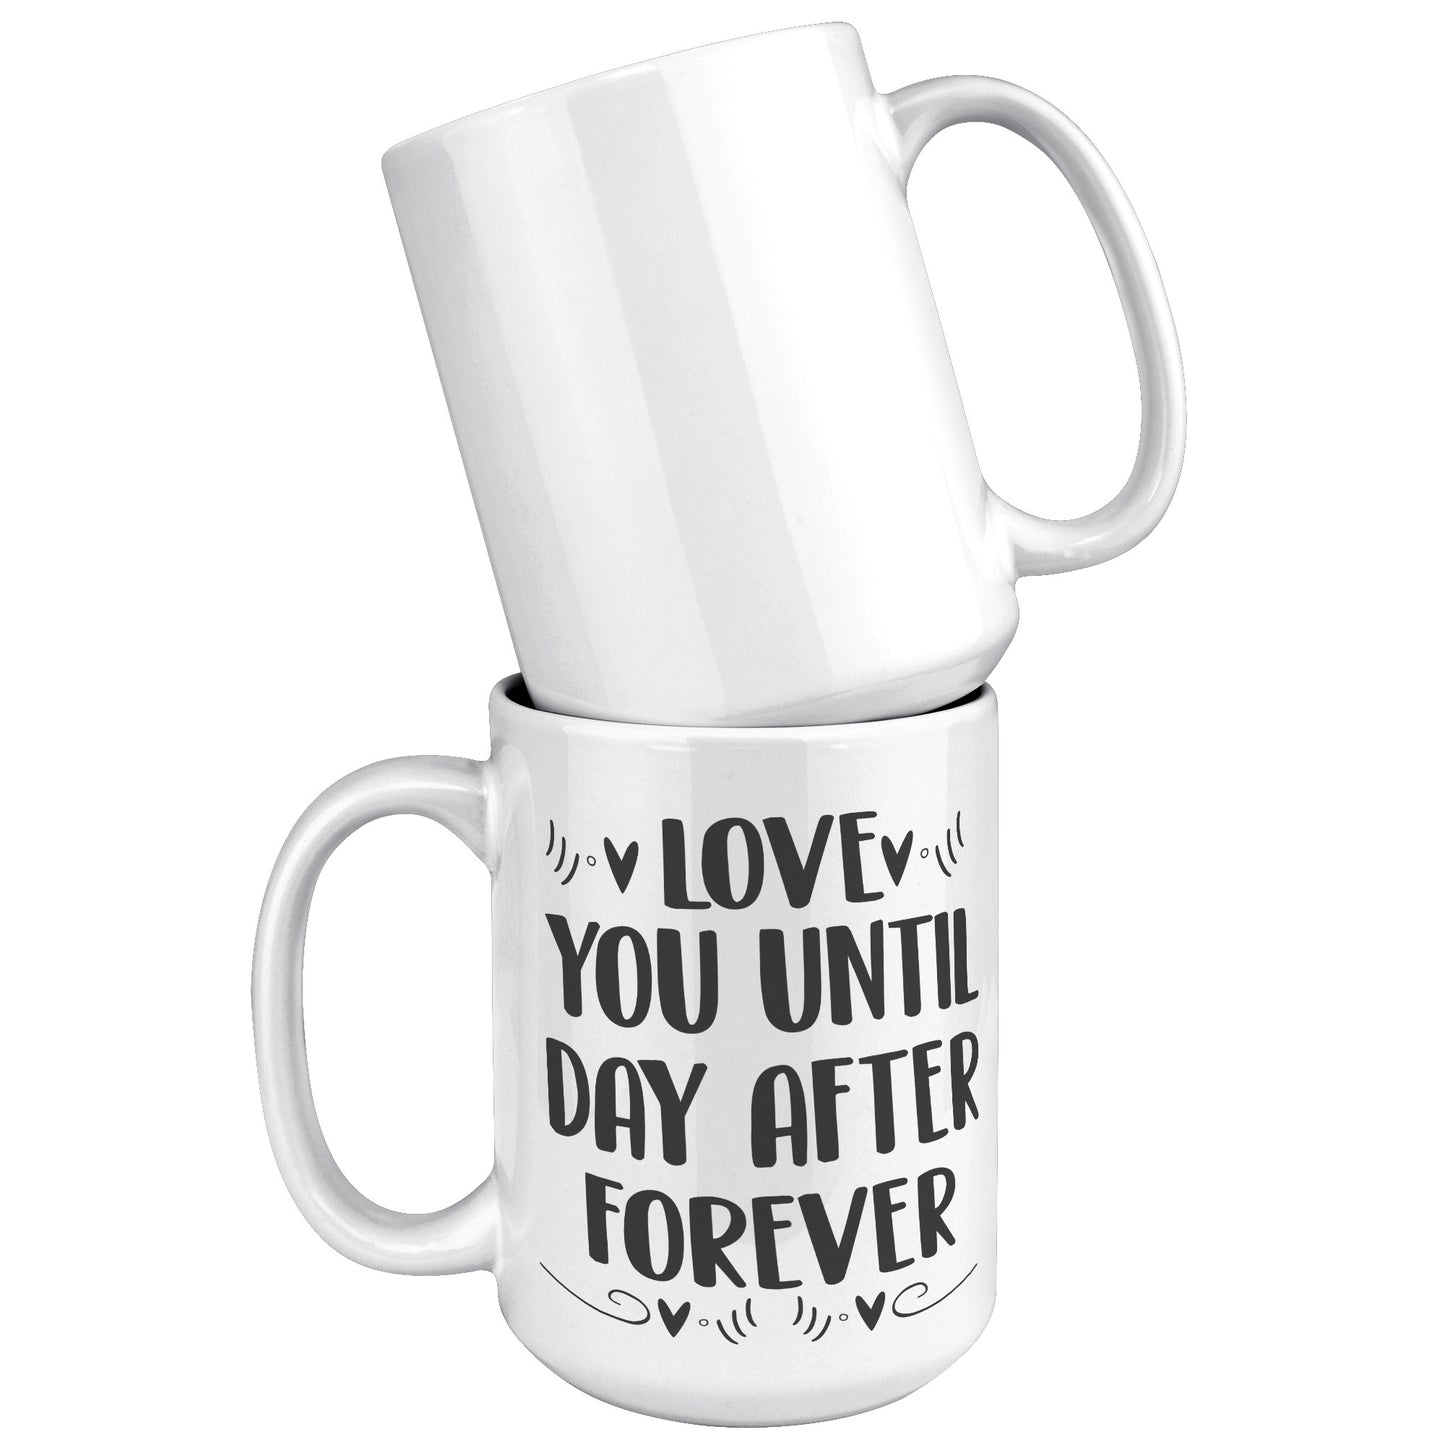 Love you until day after forever Mug, Lovers Mug, Gift for Couples, Valentine Mug, Boyfriend and Girlfriend Mug - 15oz